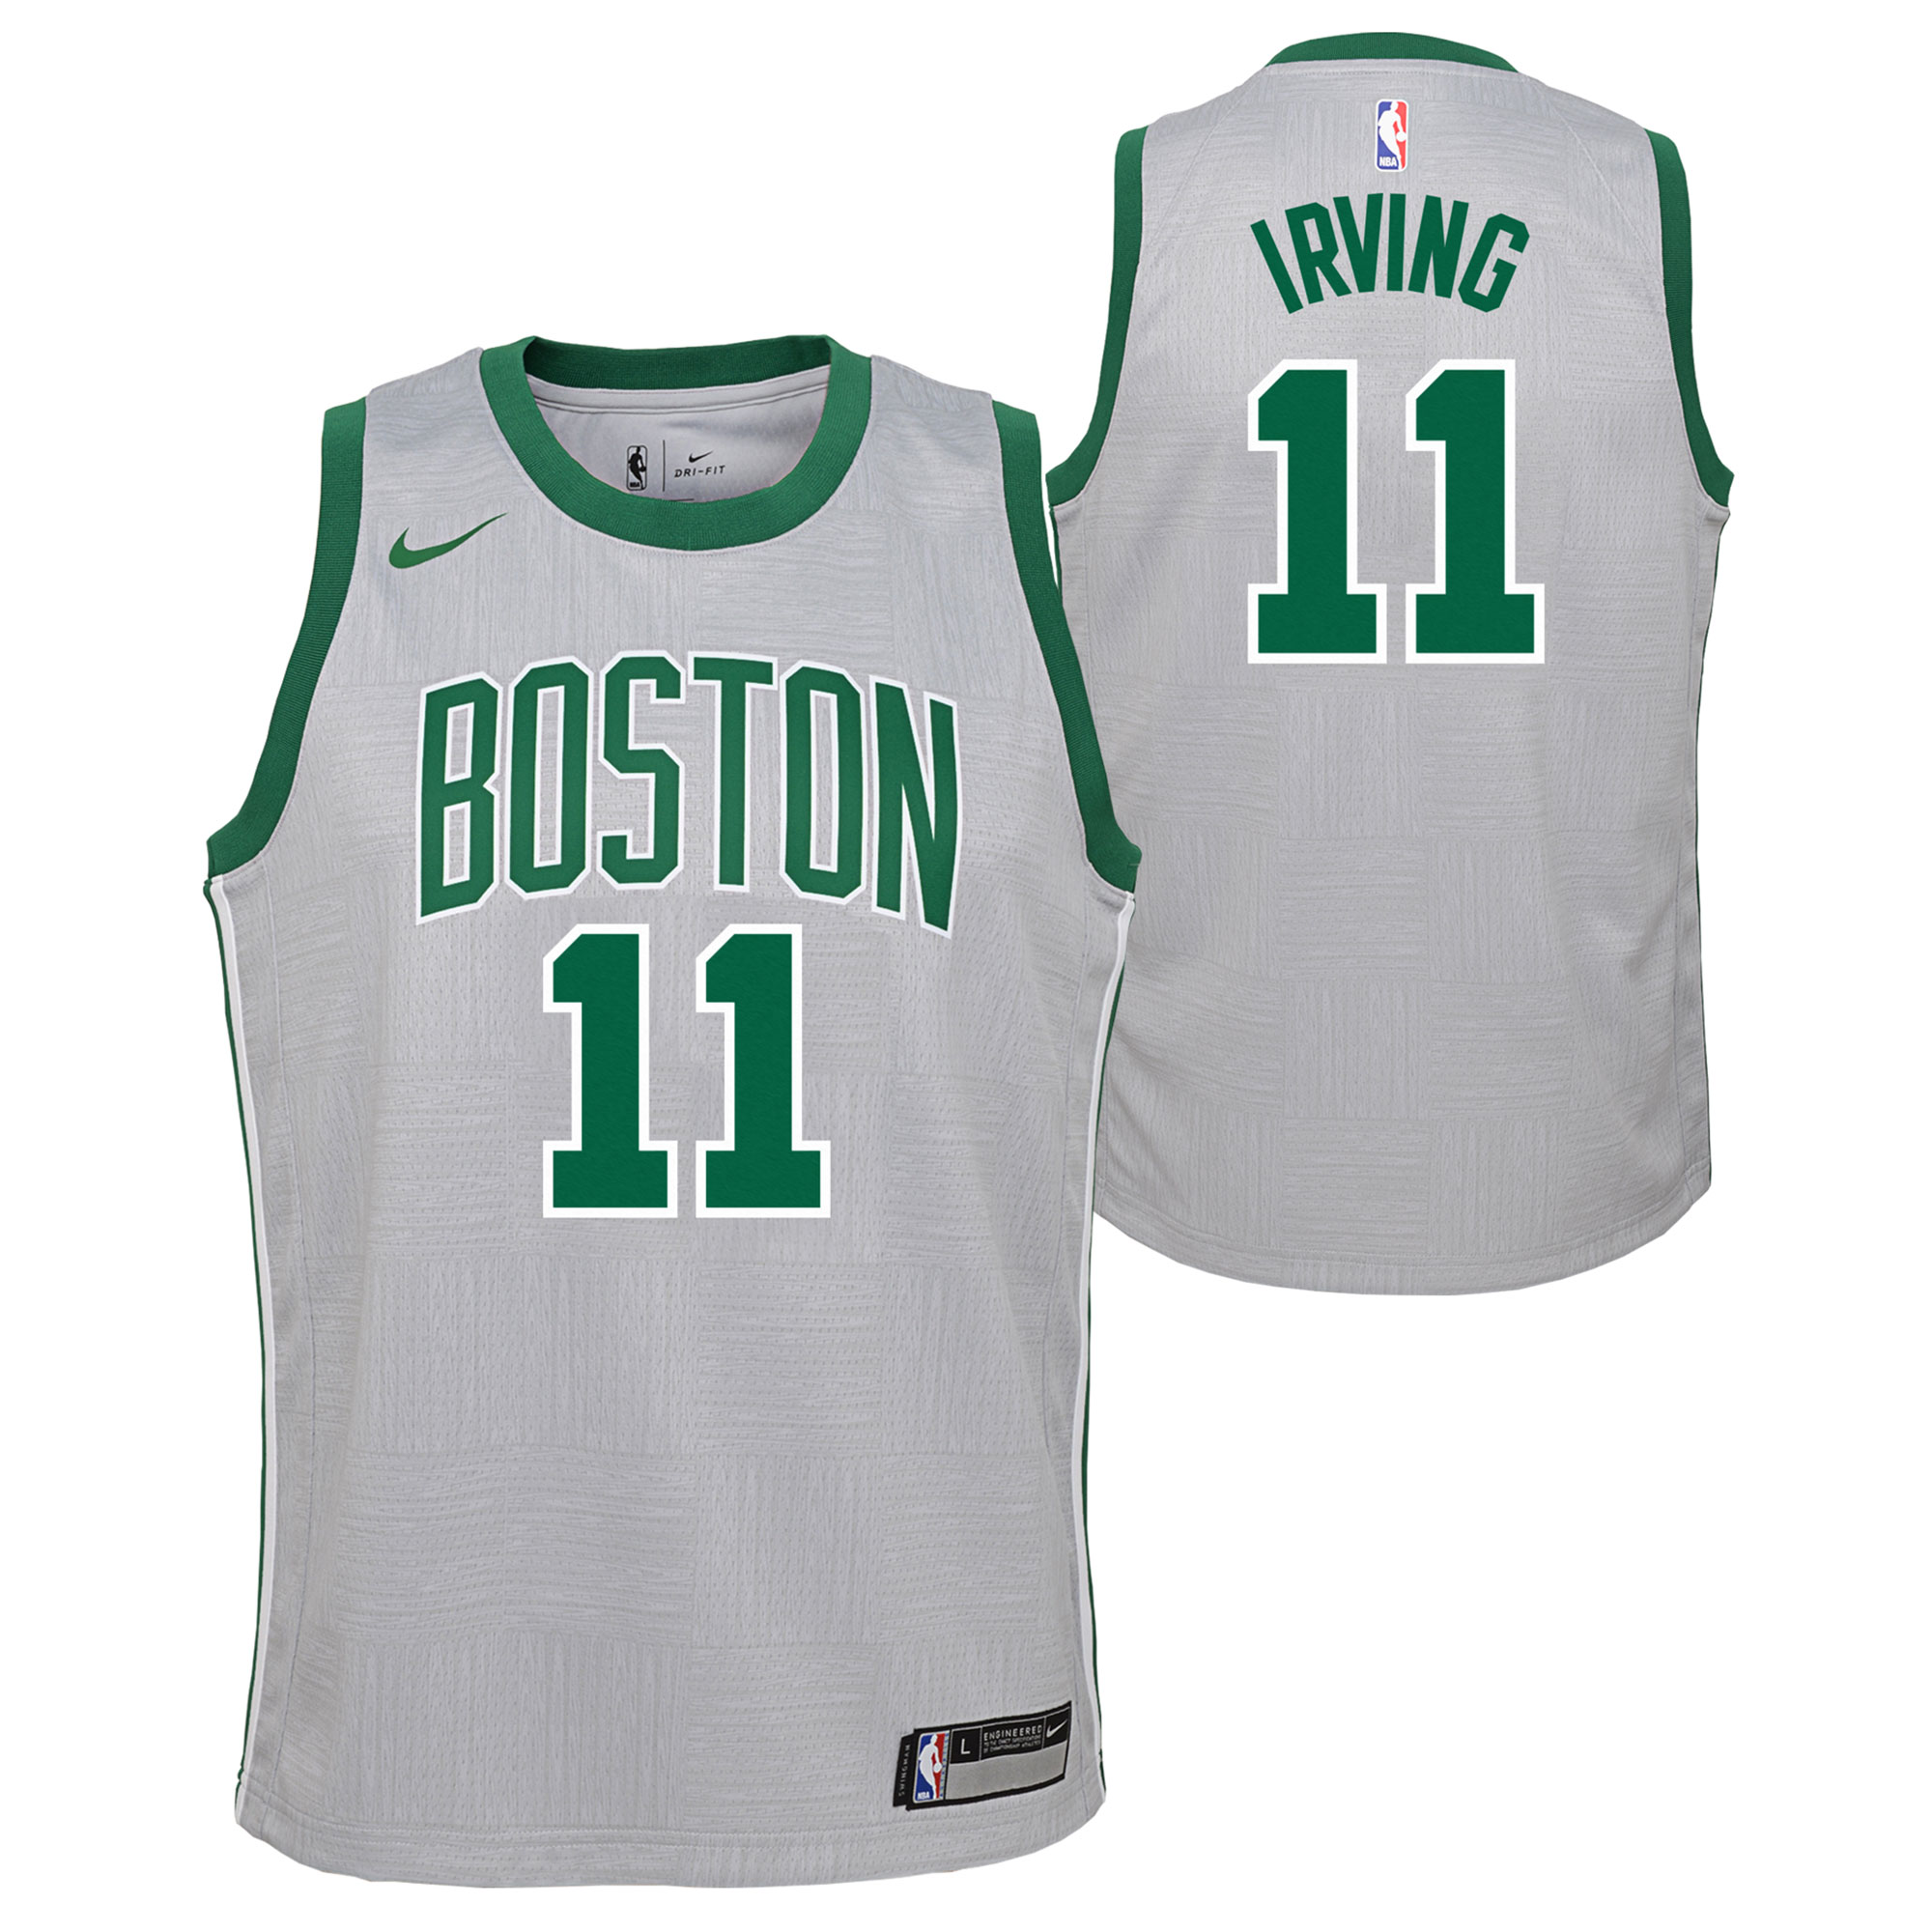 "Boston Celtics Nike City Swingman Jersey - Kyrie Irving - Youth"